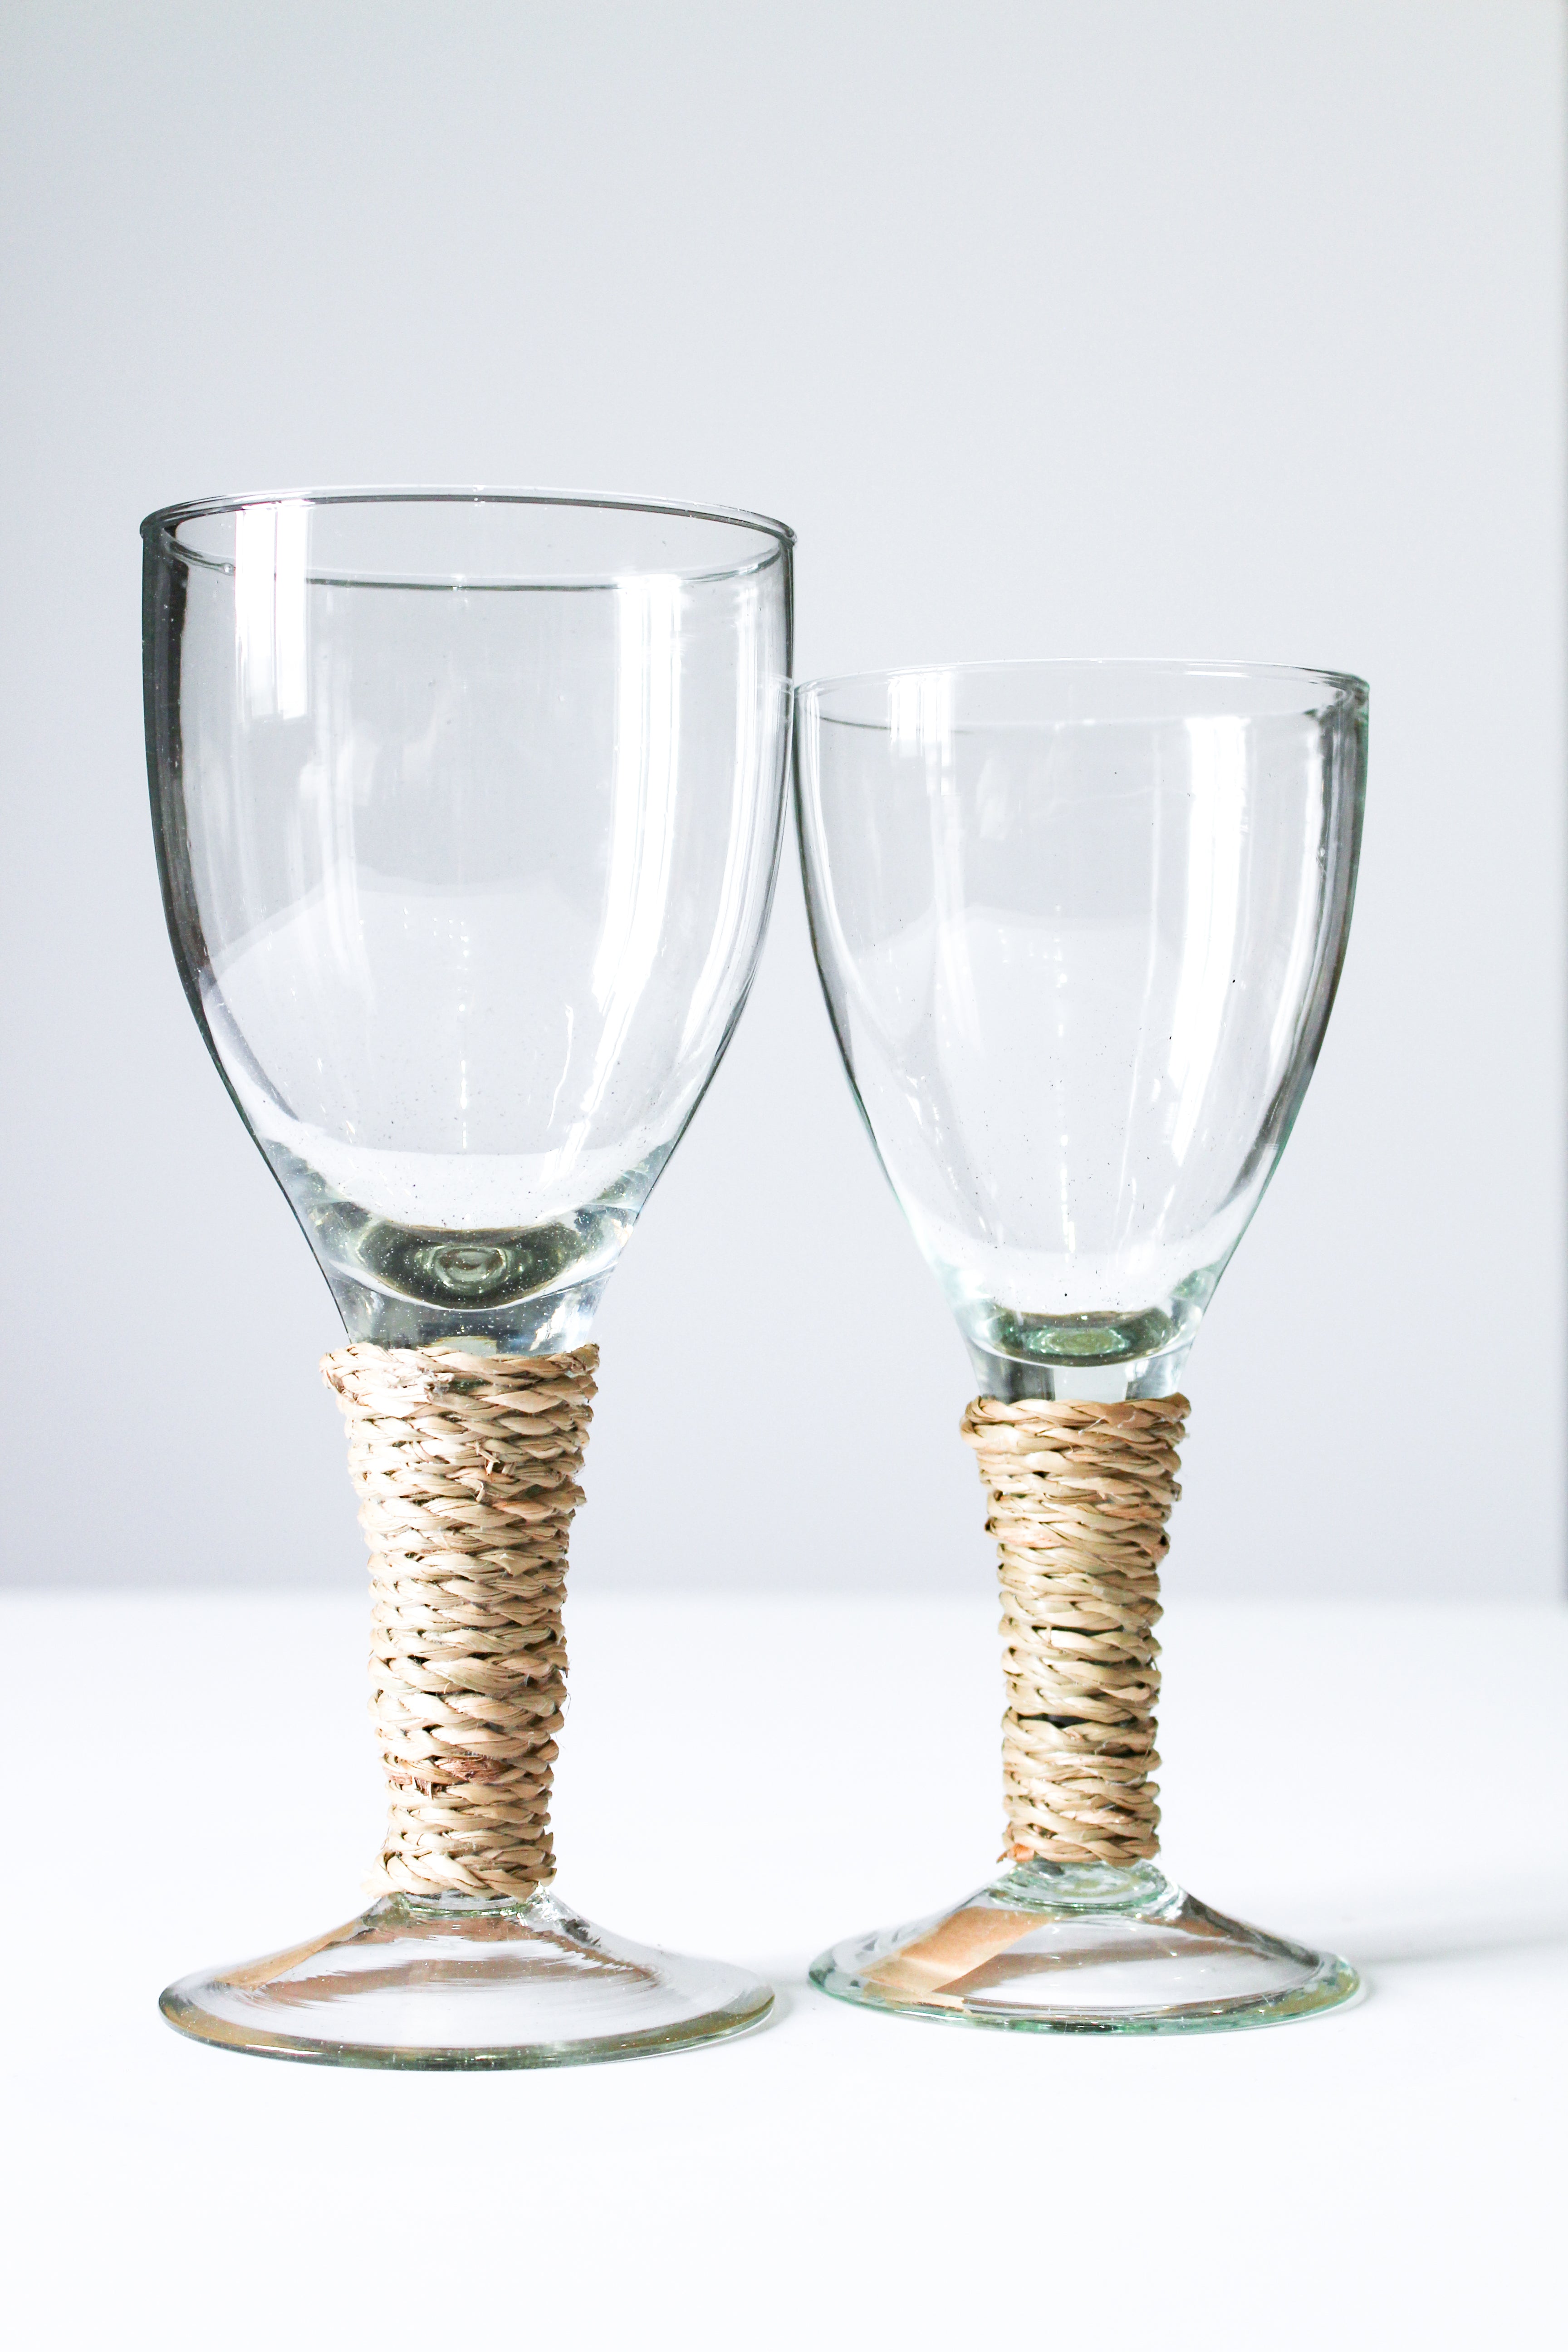 Seagrass Wine Glass Small - Glass - Seagrass - Brand_Seagrass & Rattan - Kitchen_Drinkware - Tumblers & Highballs - IMG_8649